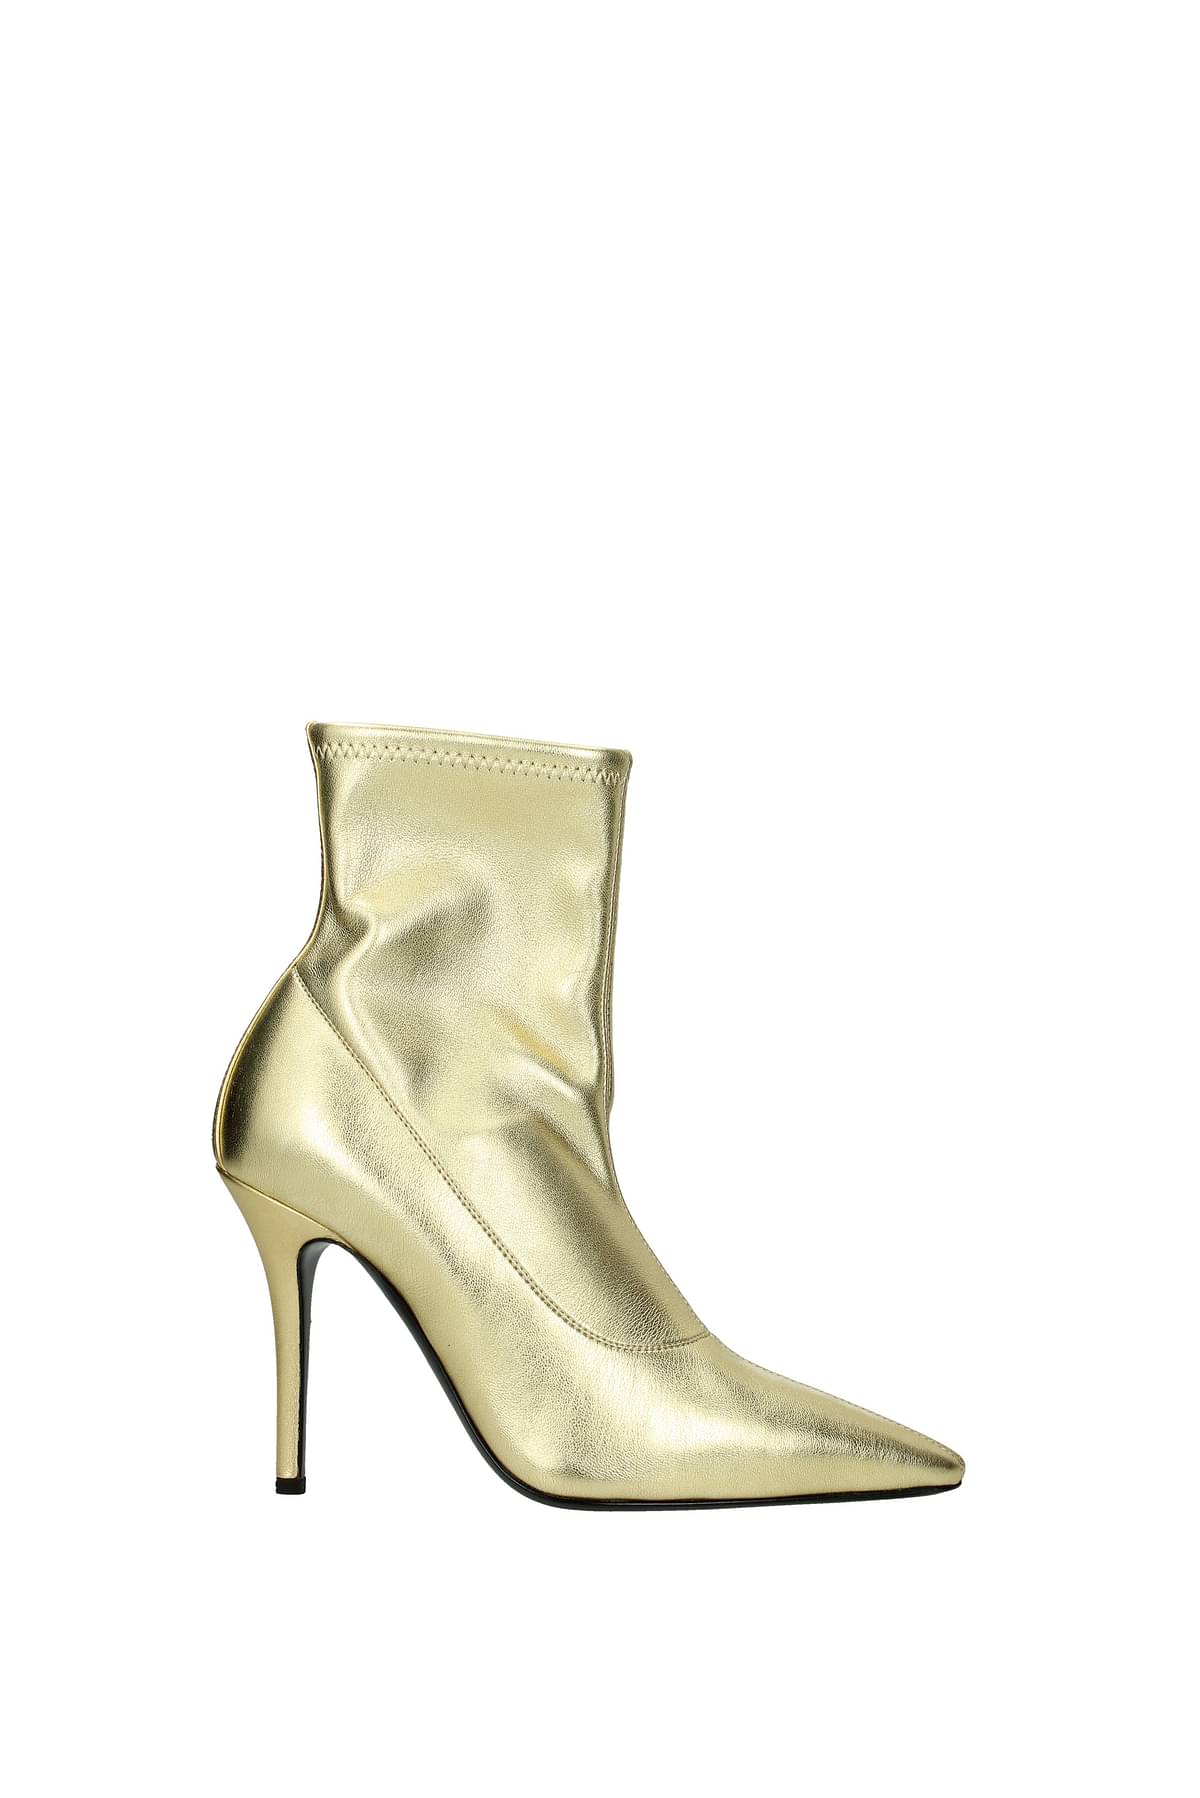 Giuseppe Zanotti Ankle boots notte Women Leather 364,88€